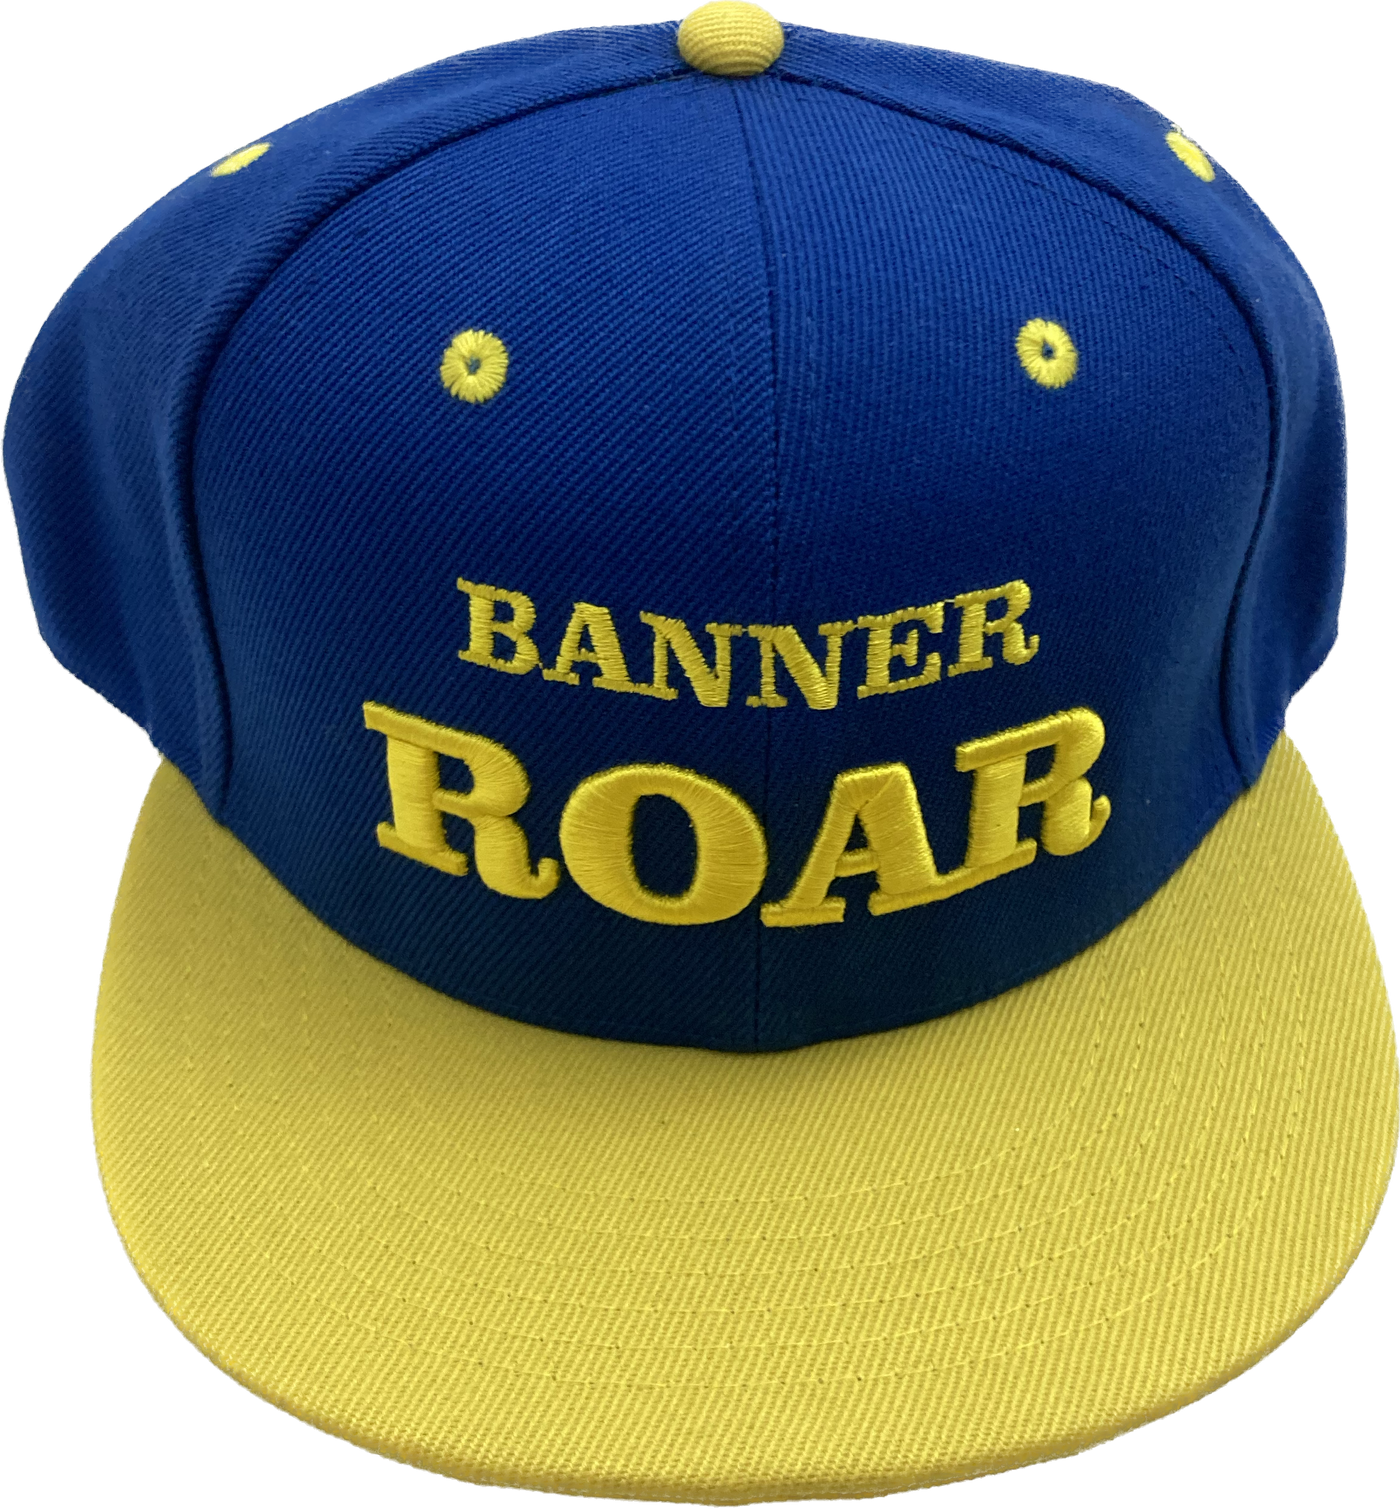 Banner Roar Snapback Cap